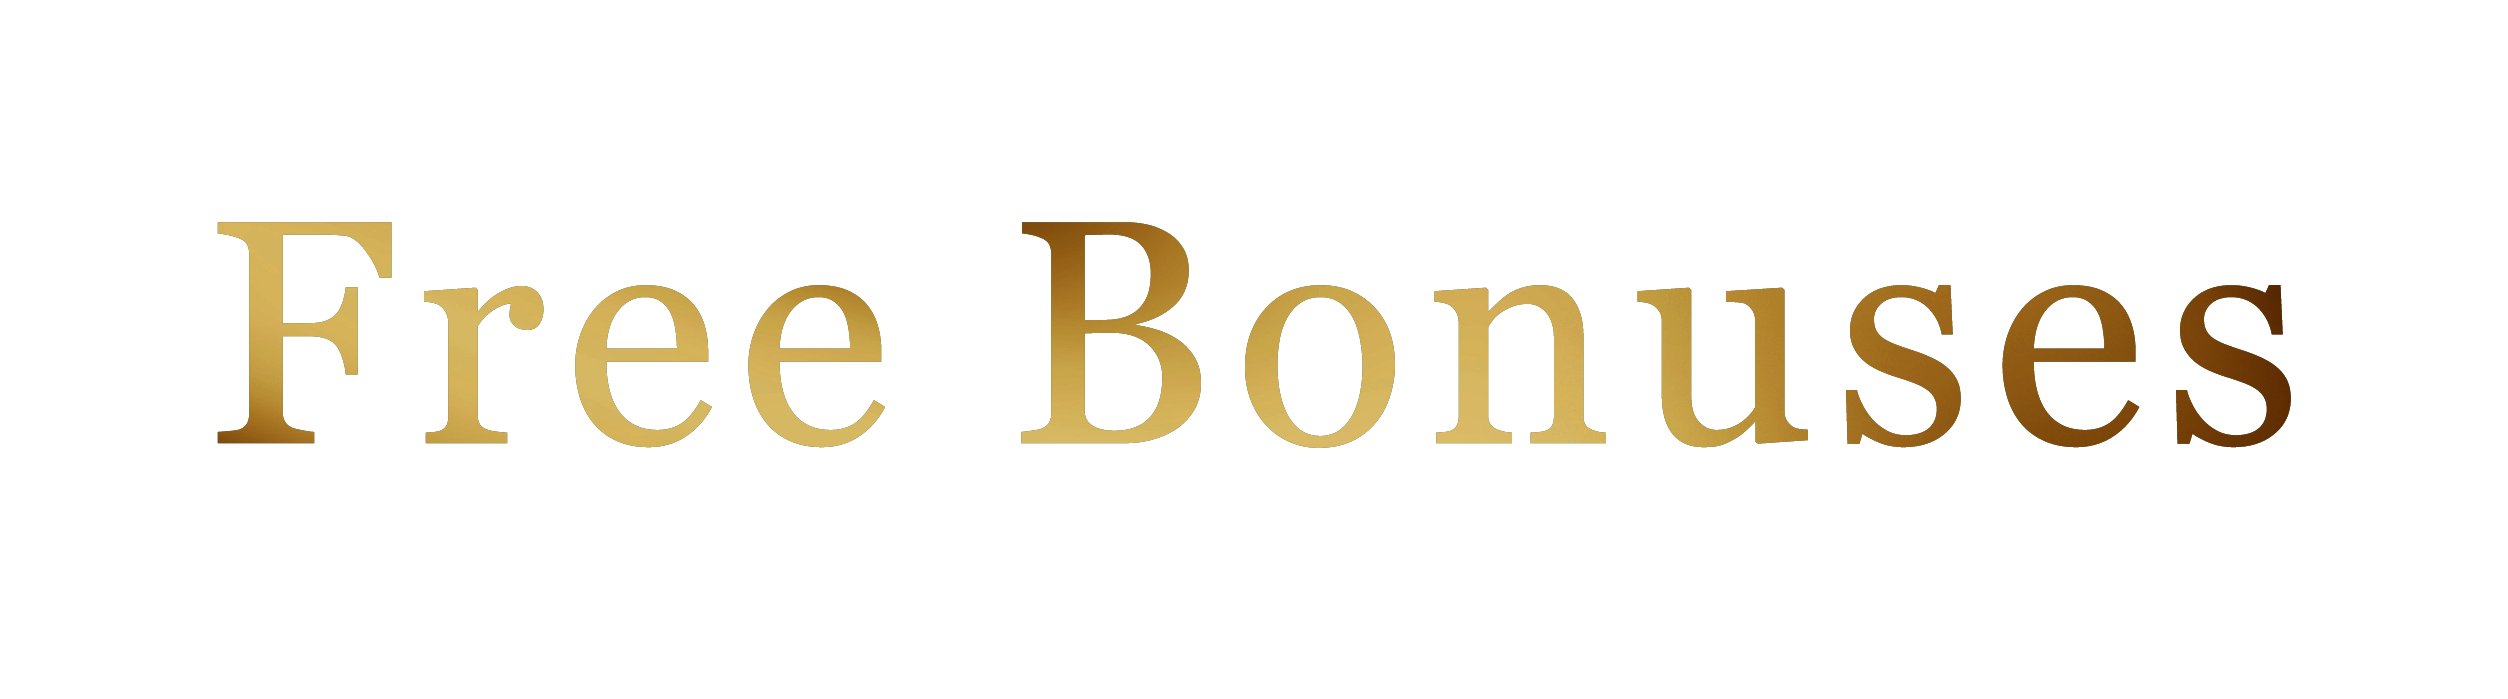 Free Bonuses - Gold